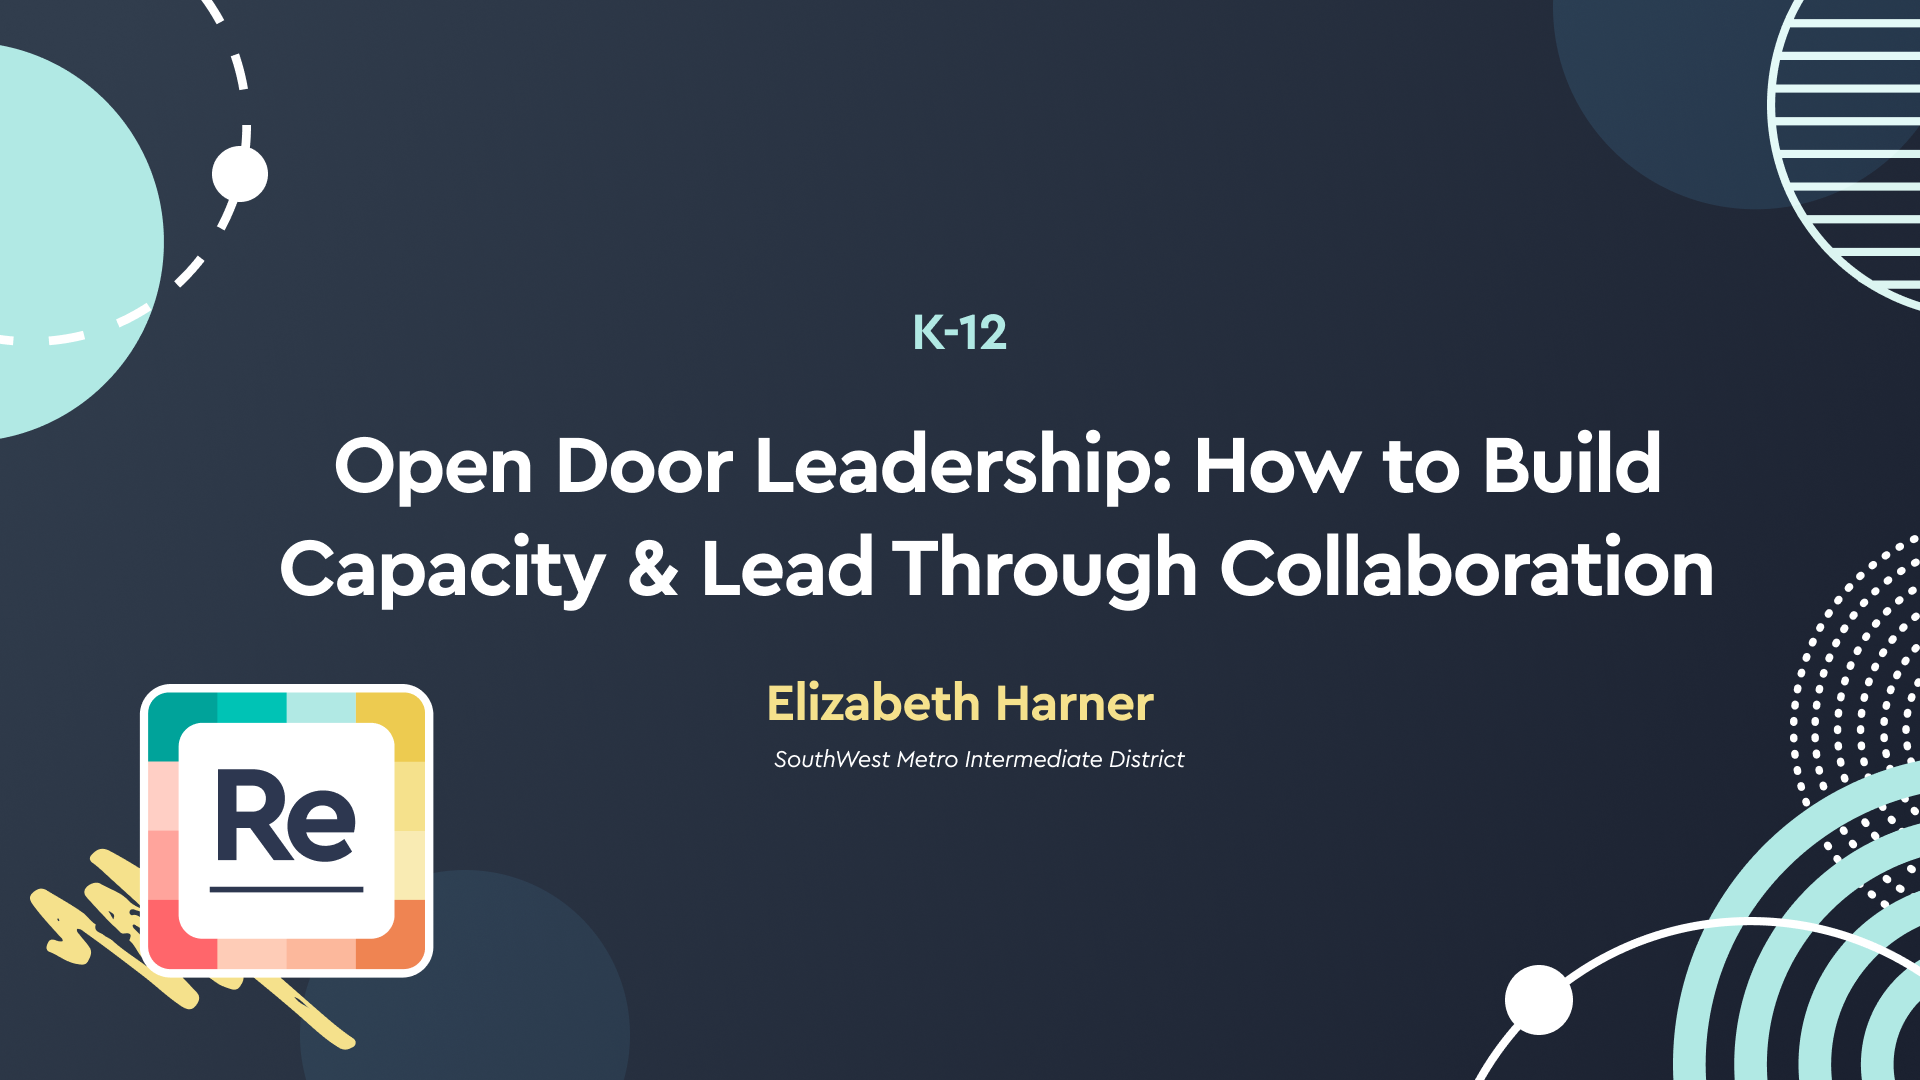 Open Door Leadership: How to Build Capacity & Lead Through Collaboration